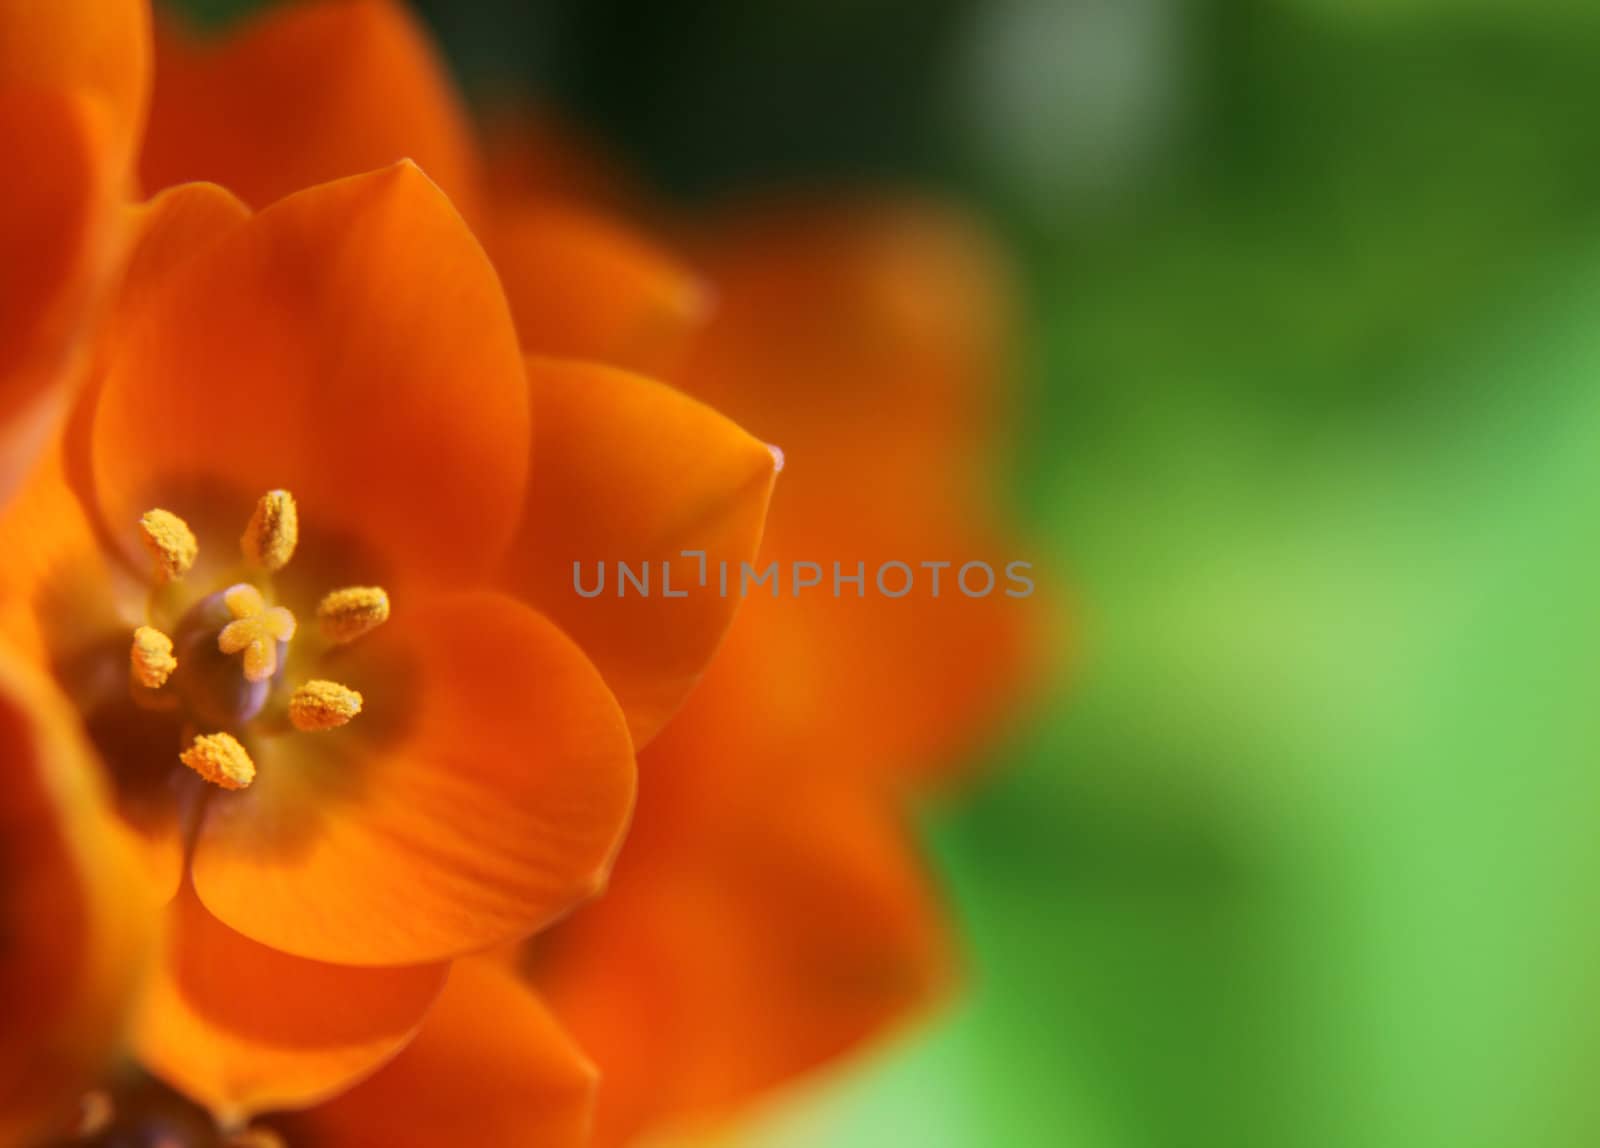 A close-up of an Orange Star flower. (ornithogalum dubium )  Shot with a shallow depth of field.
